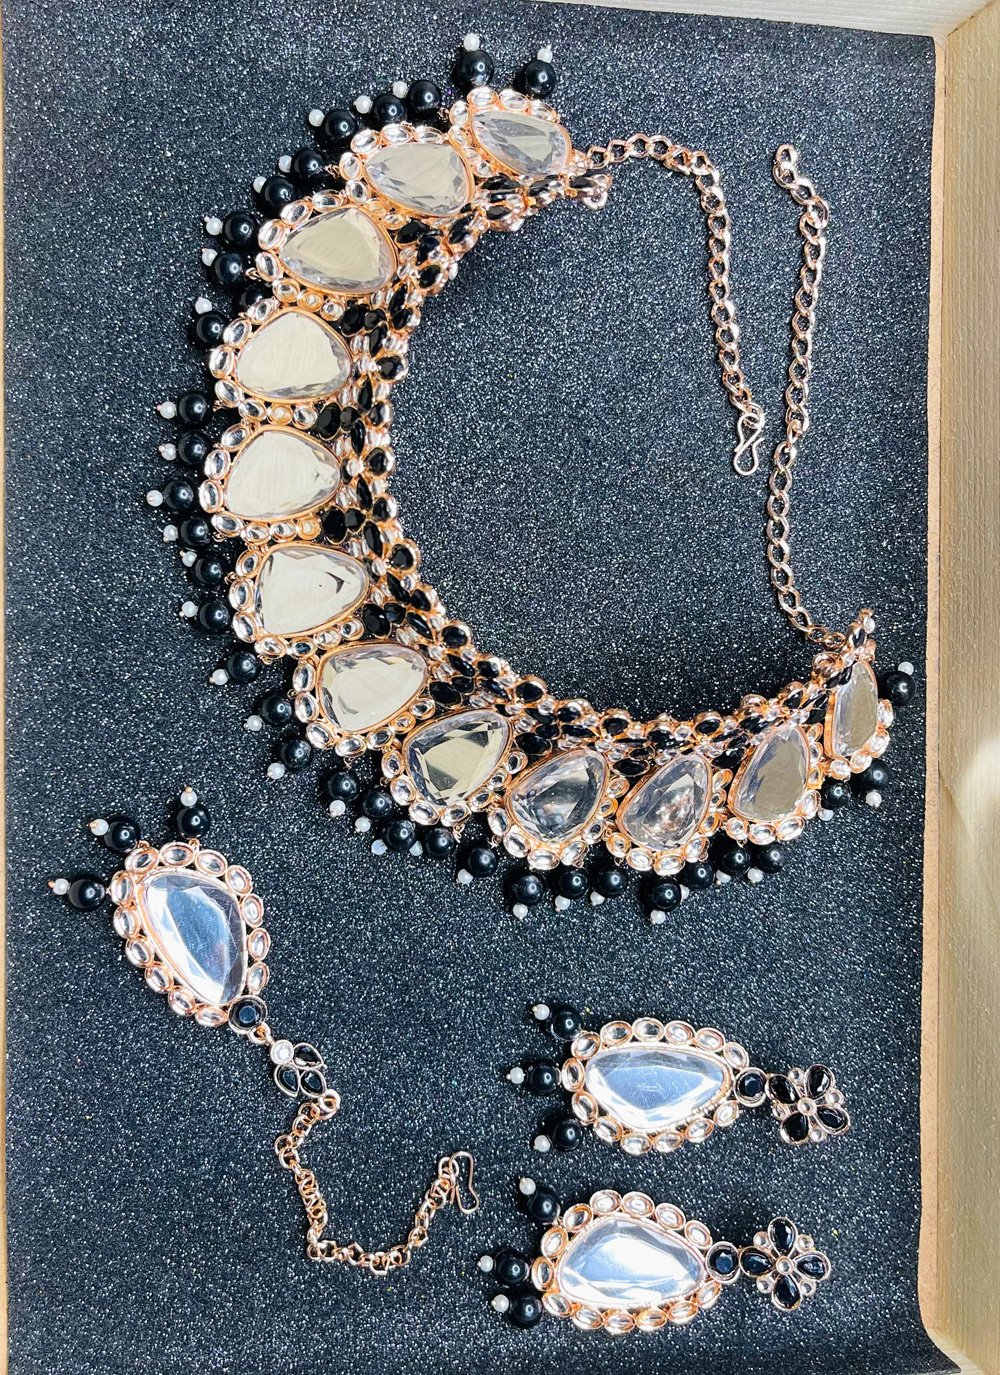 Superb Alloy Beads Work Black and White Gold Rodium Polish Necklace Set